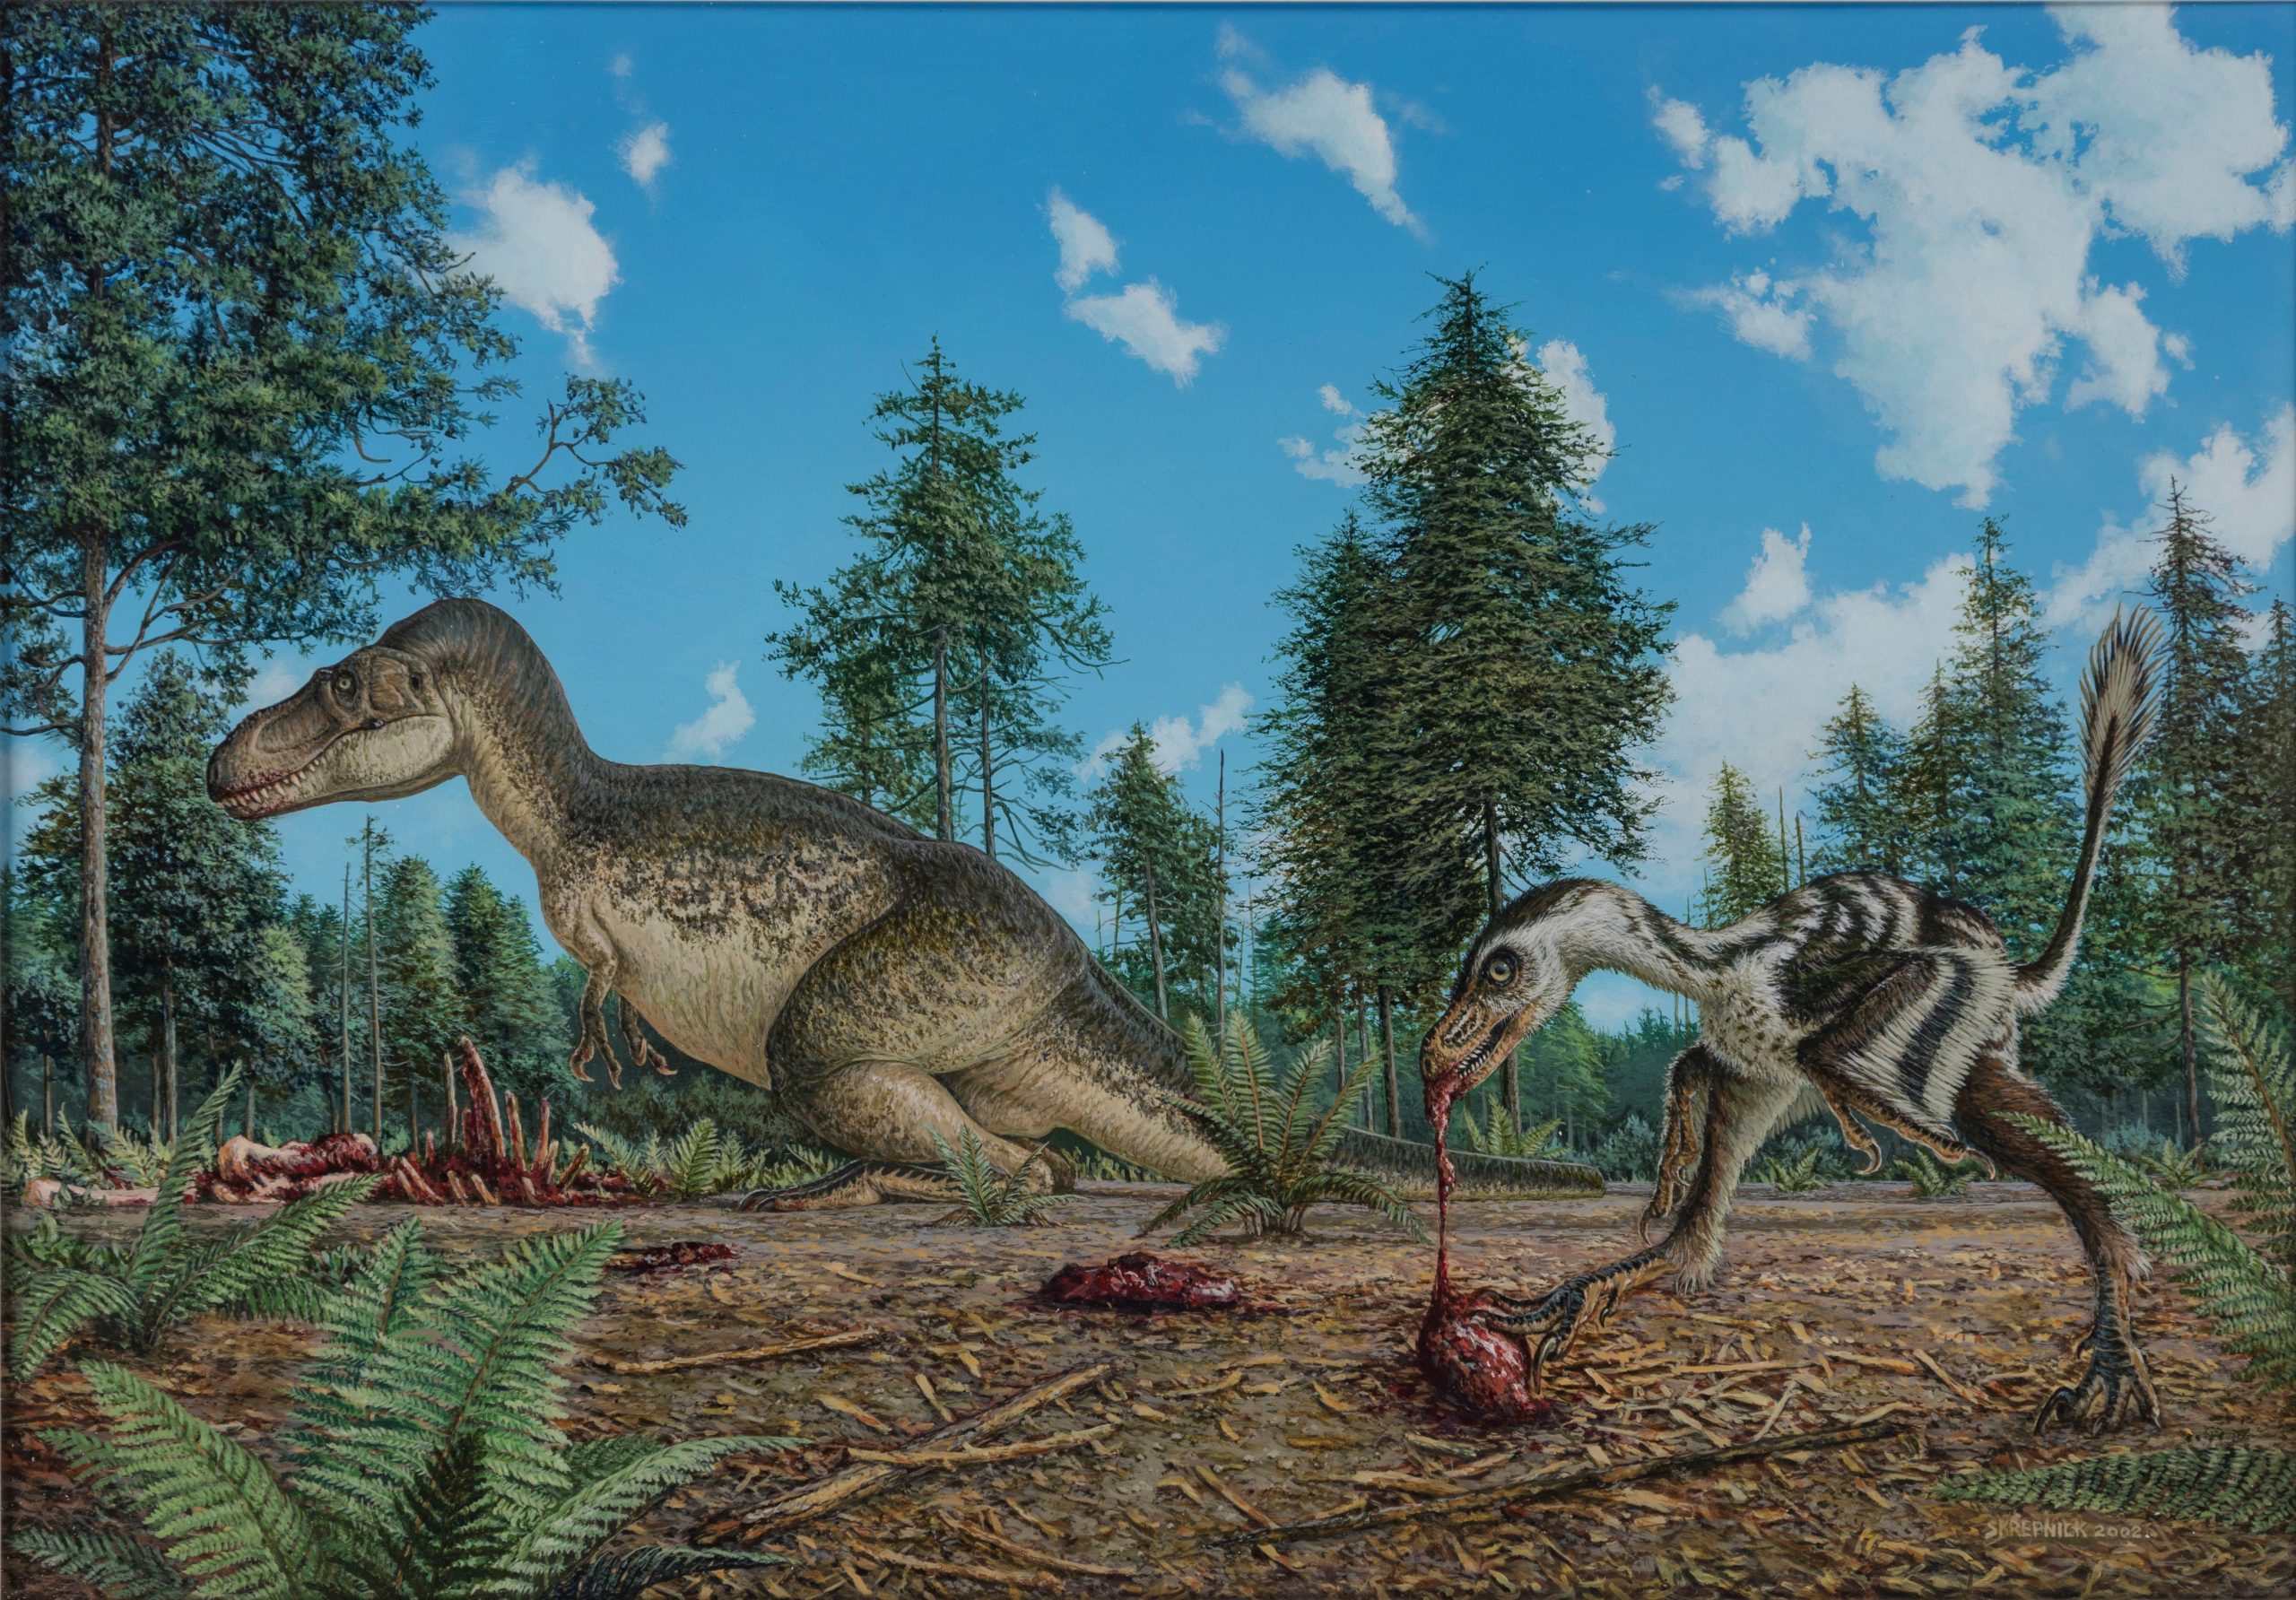 Illustration by artist Michael Skrepnik of the <i>Bambiraptor</i> in its imagined environment.